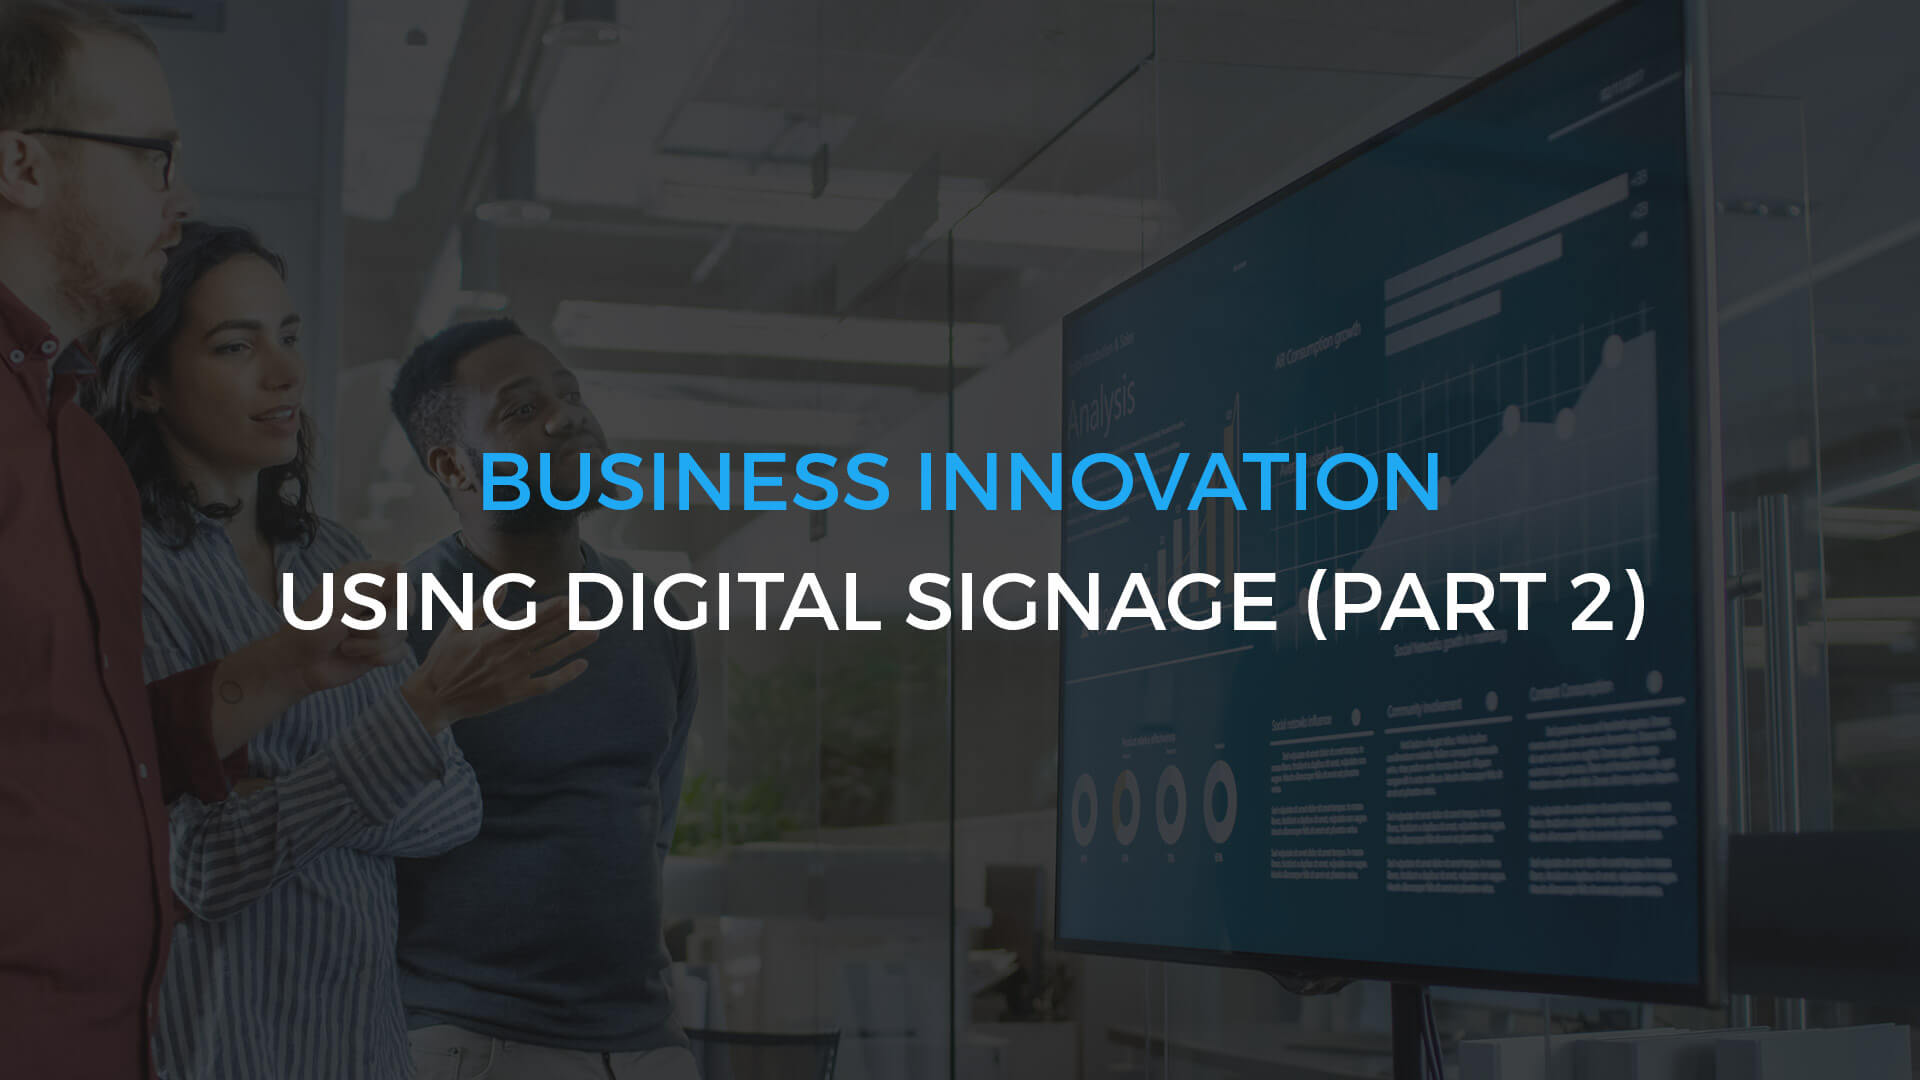 Business innovation using digital signage (Part 2)